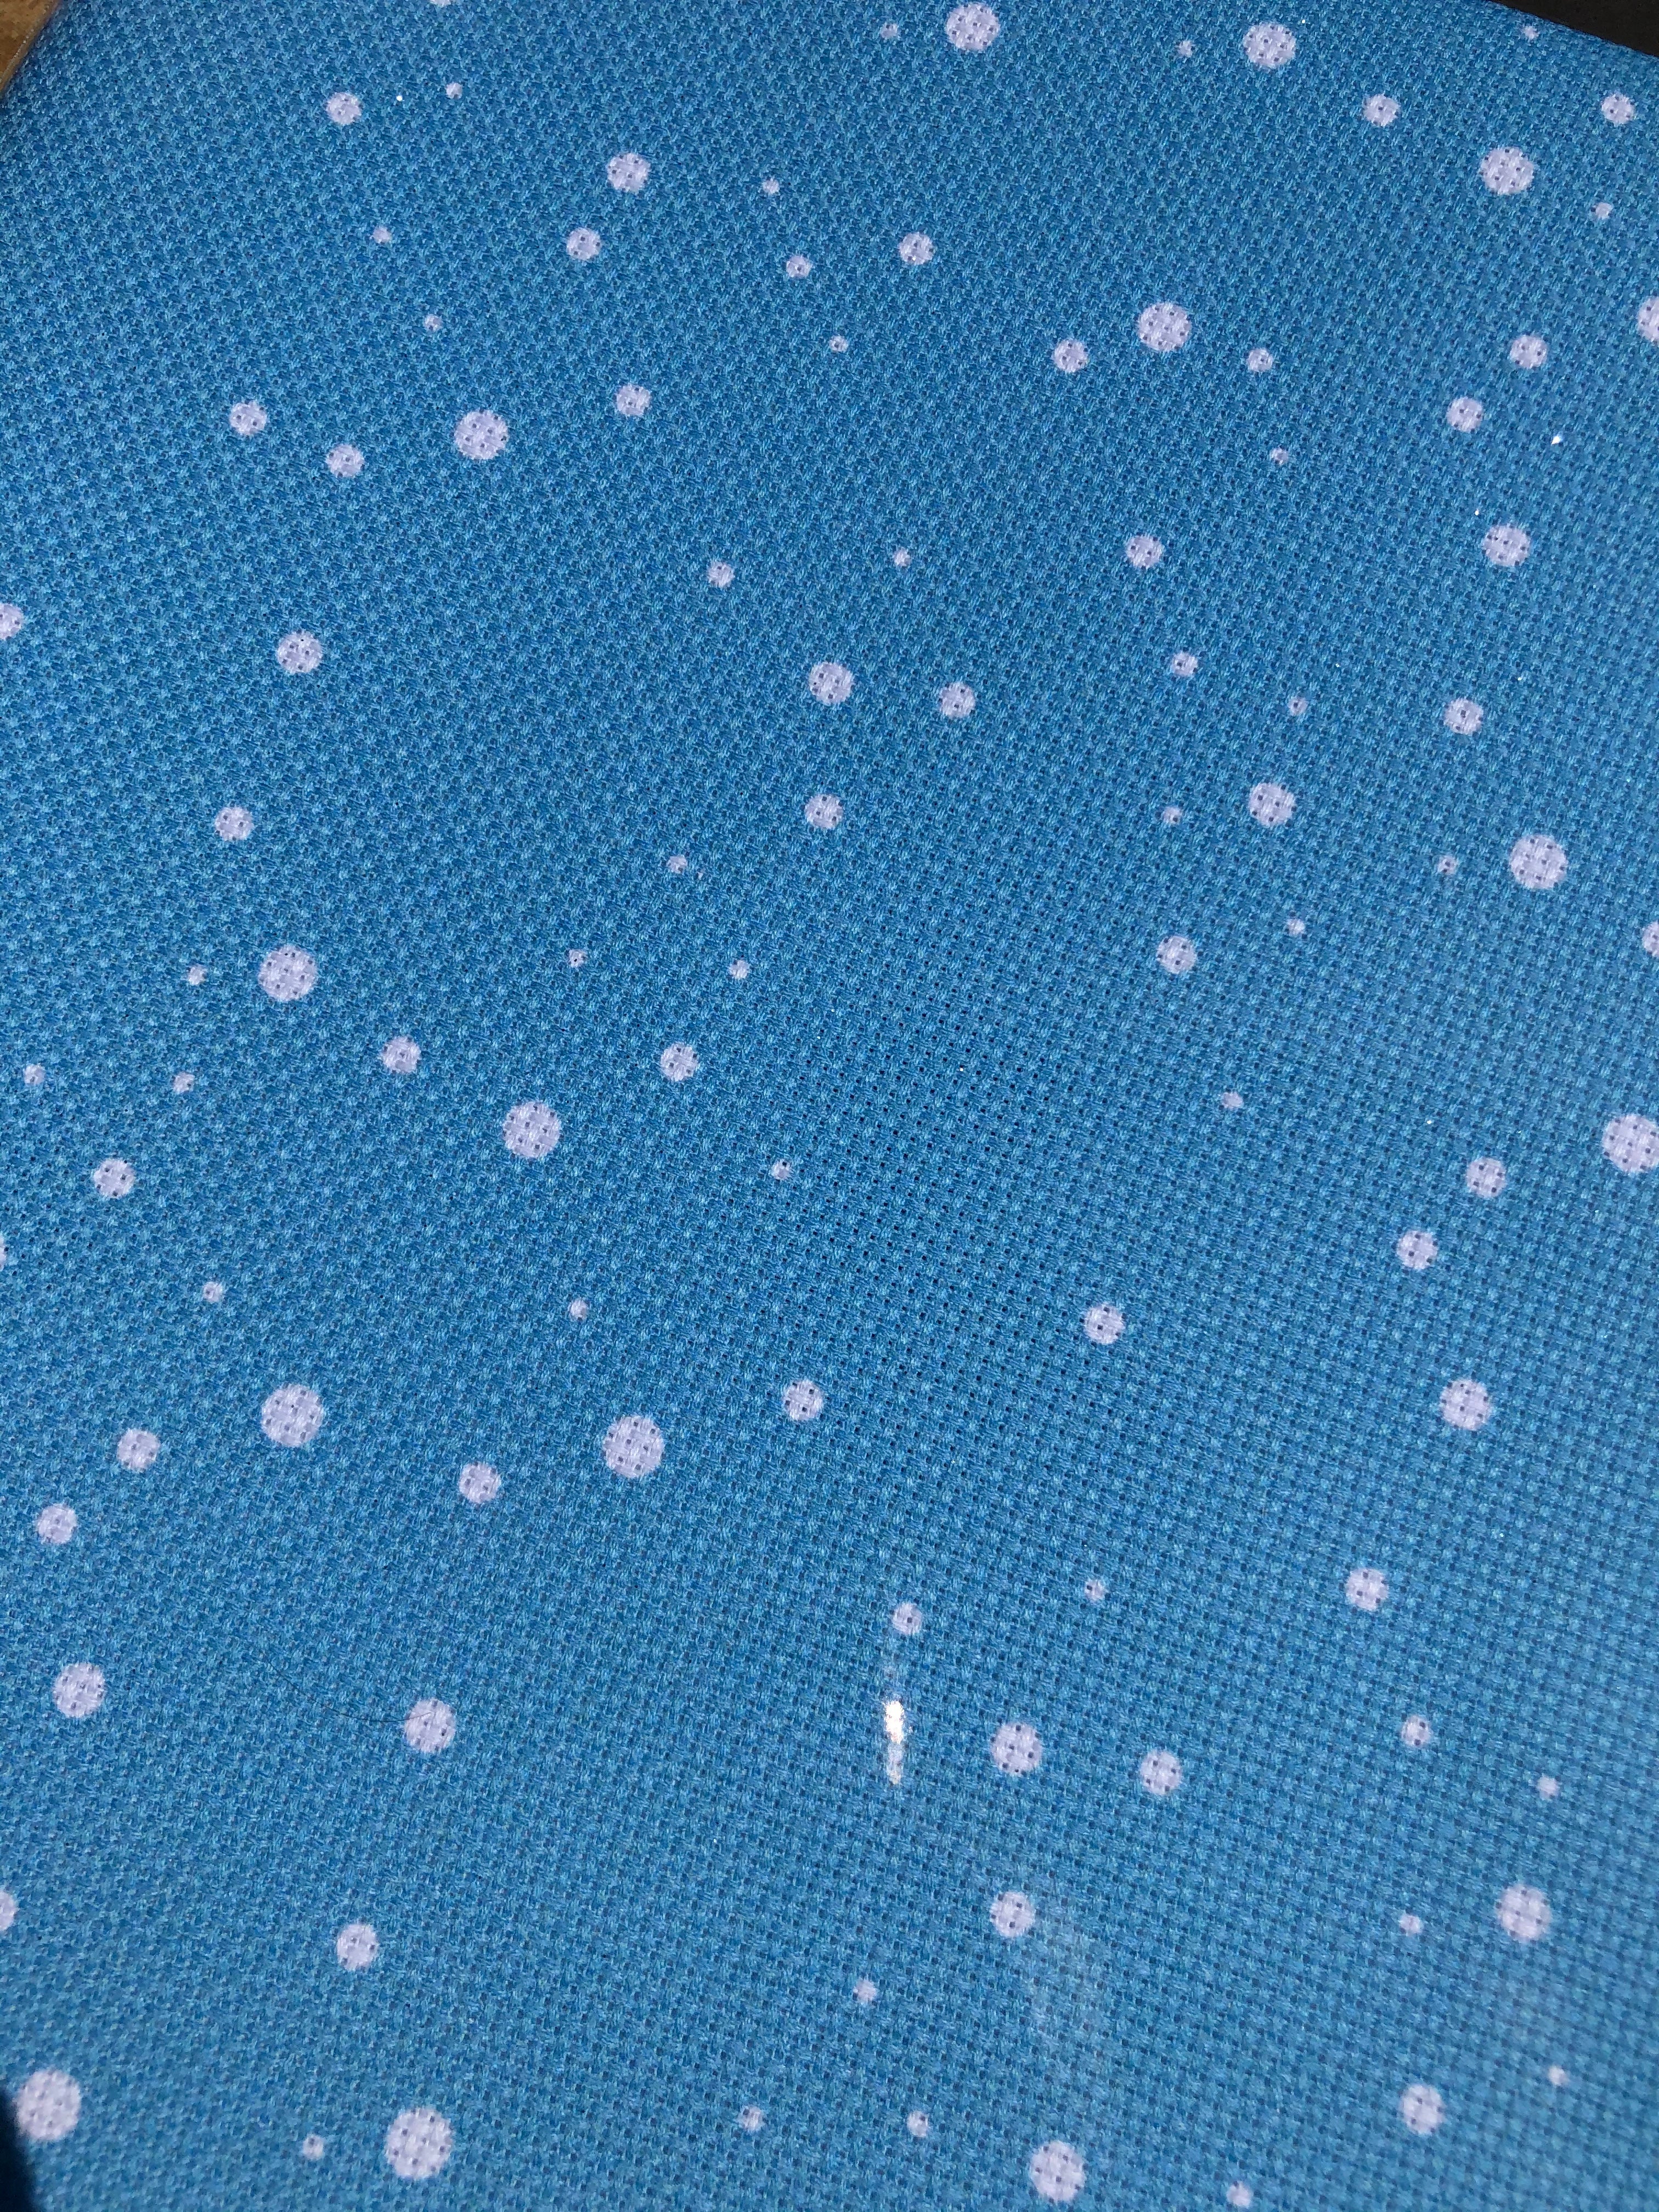 Cross Stitch Cloth - Fabric Flair 16 Count Aida - Snow on Blue